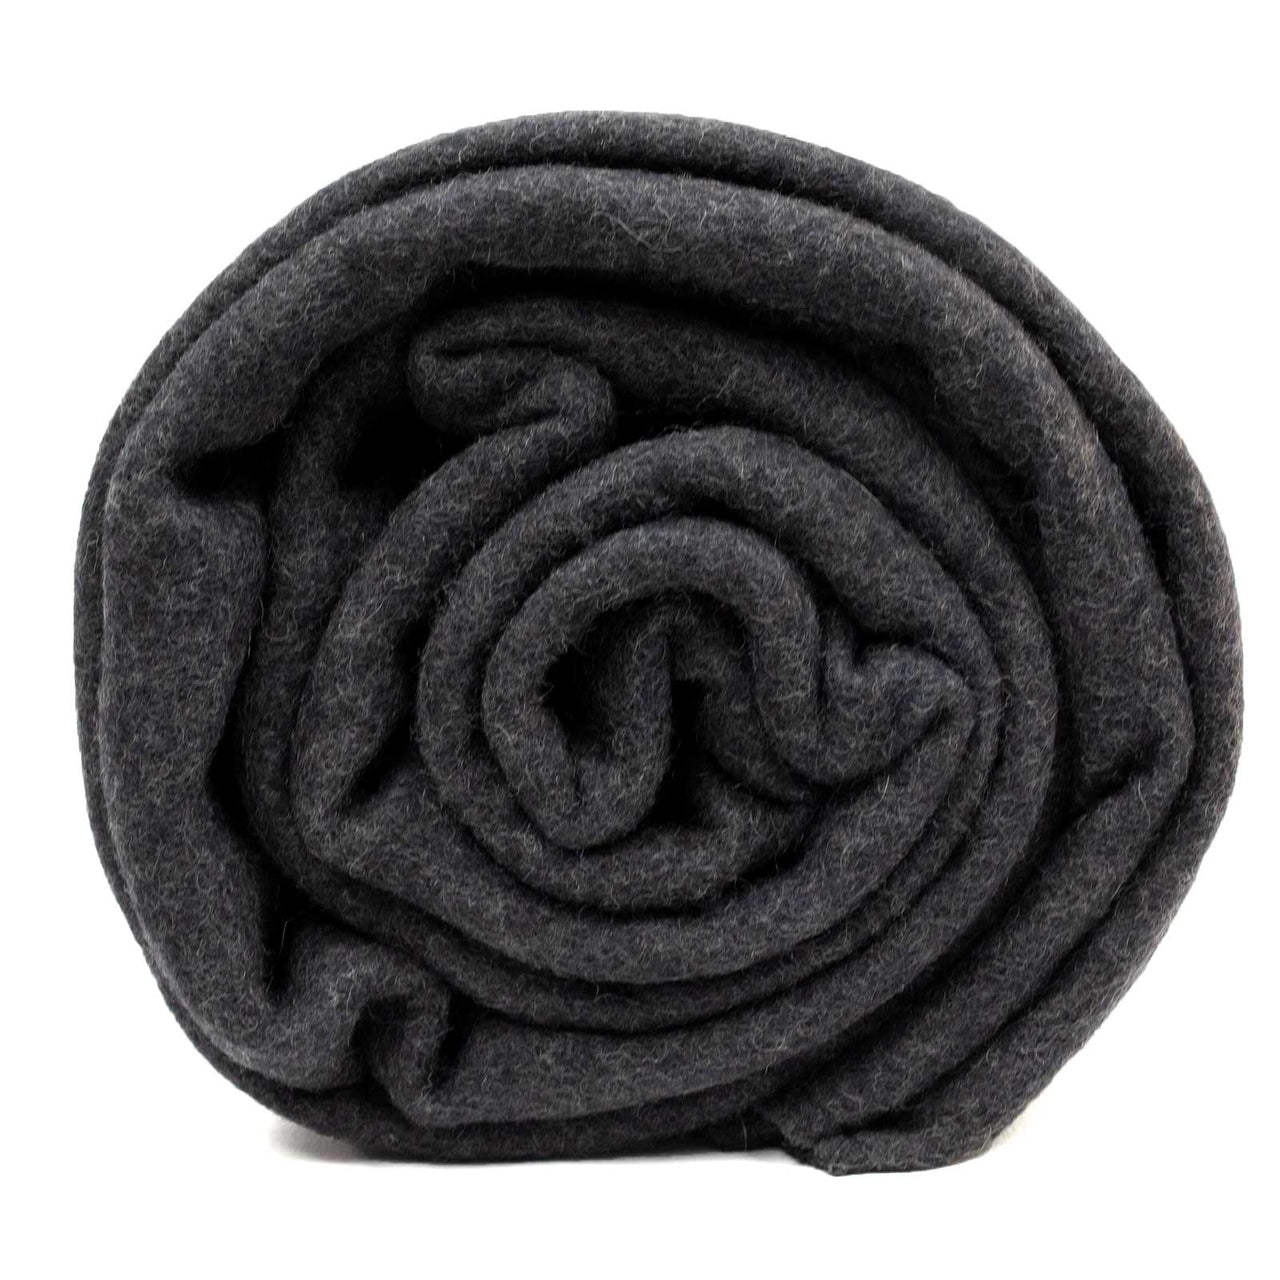 Charcoal Grey Wool Blanket